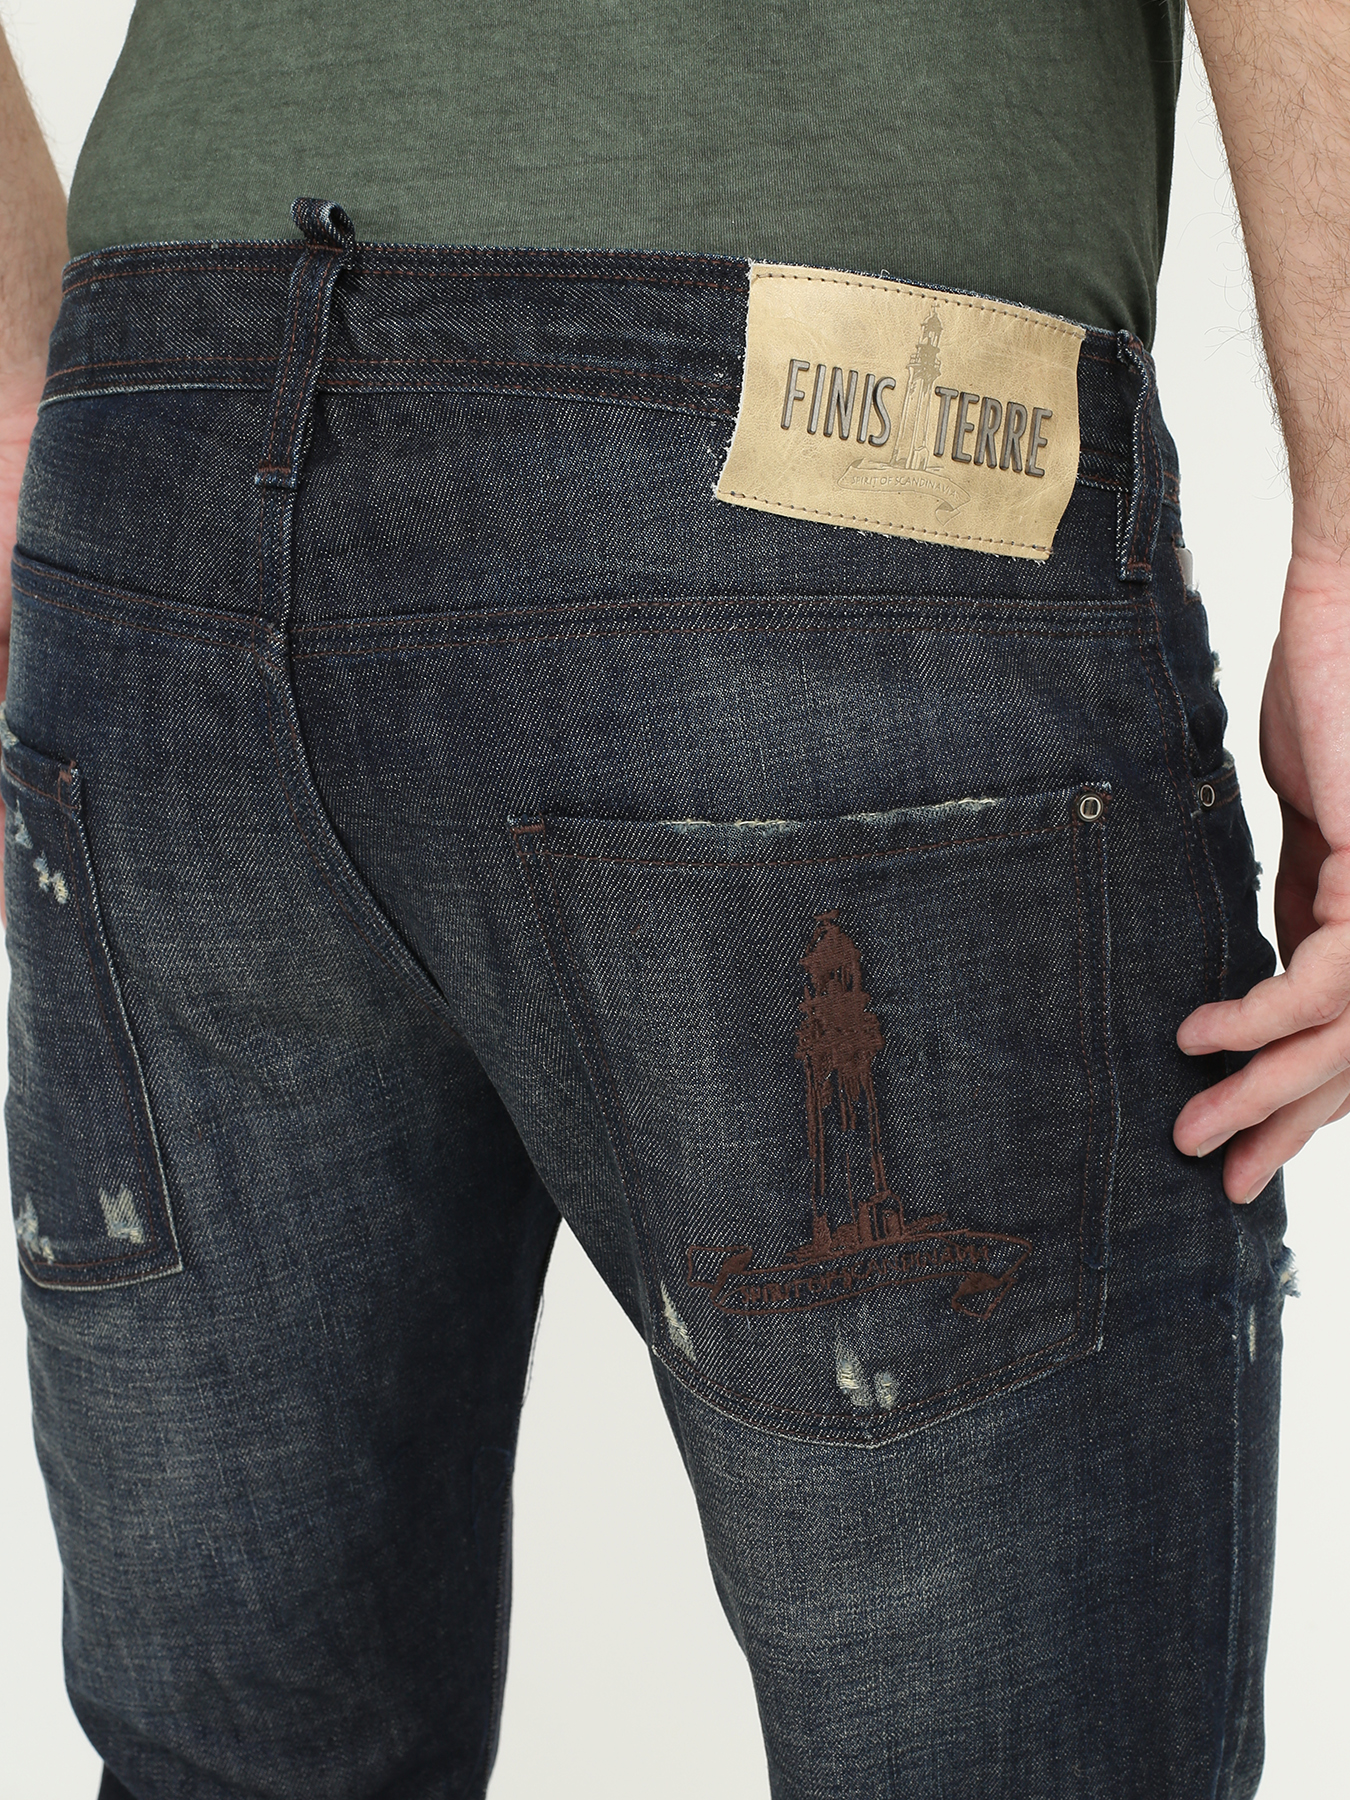 Finisterre Мужские джинсы 323204-017 Фото 4